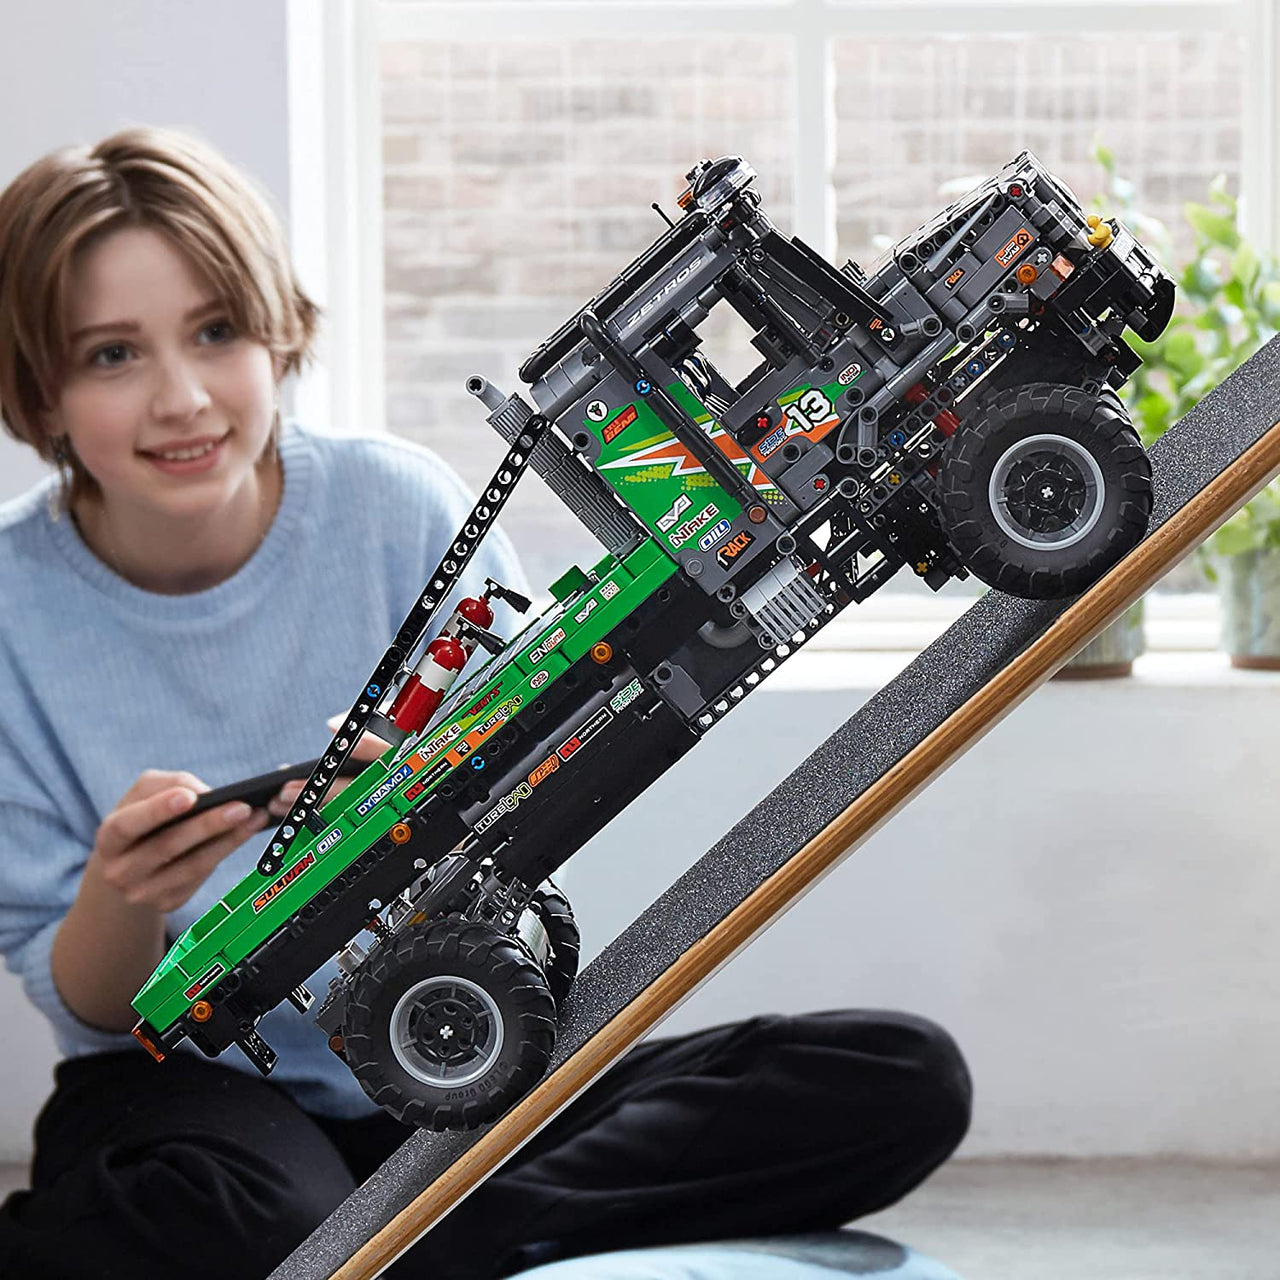 42129 LEGO Technic Mercedes Benz Zetros Truck (2110 Pieces) 